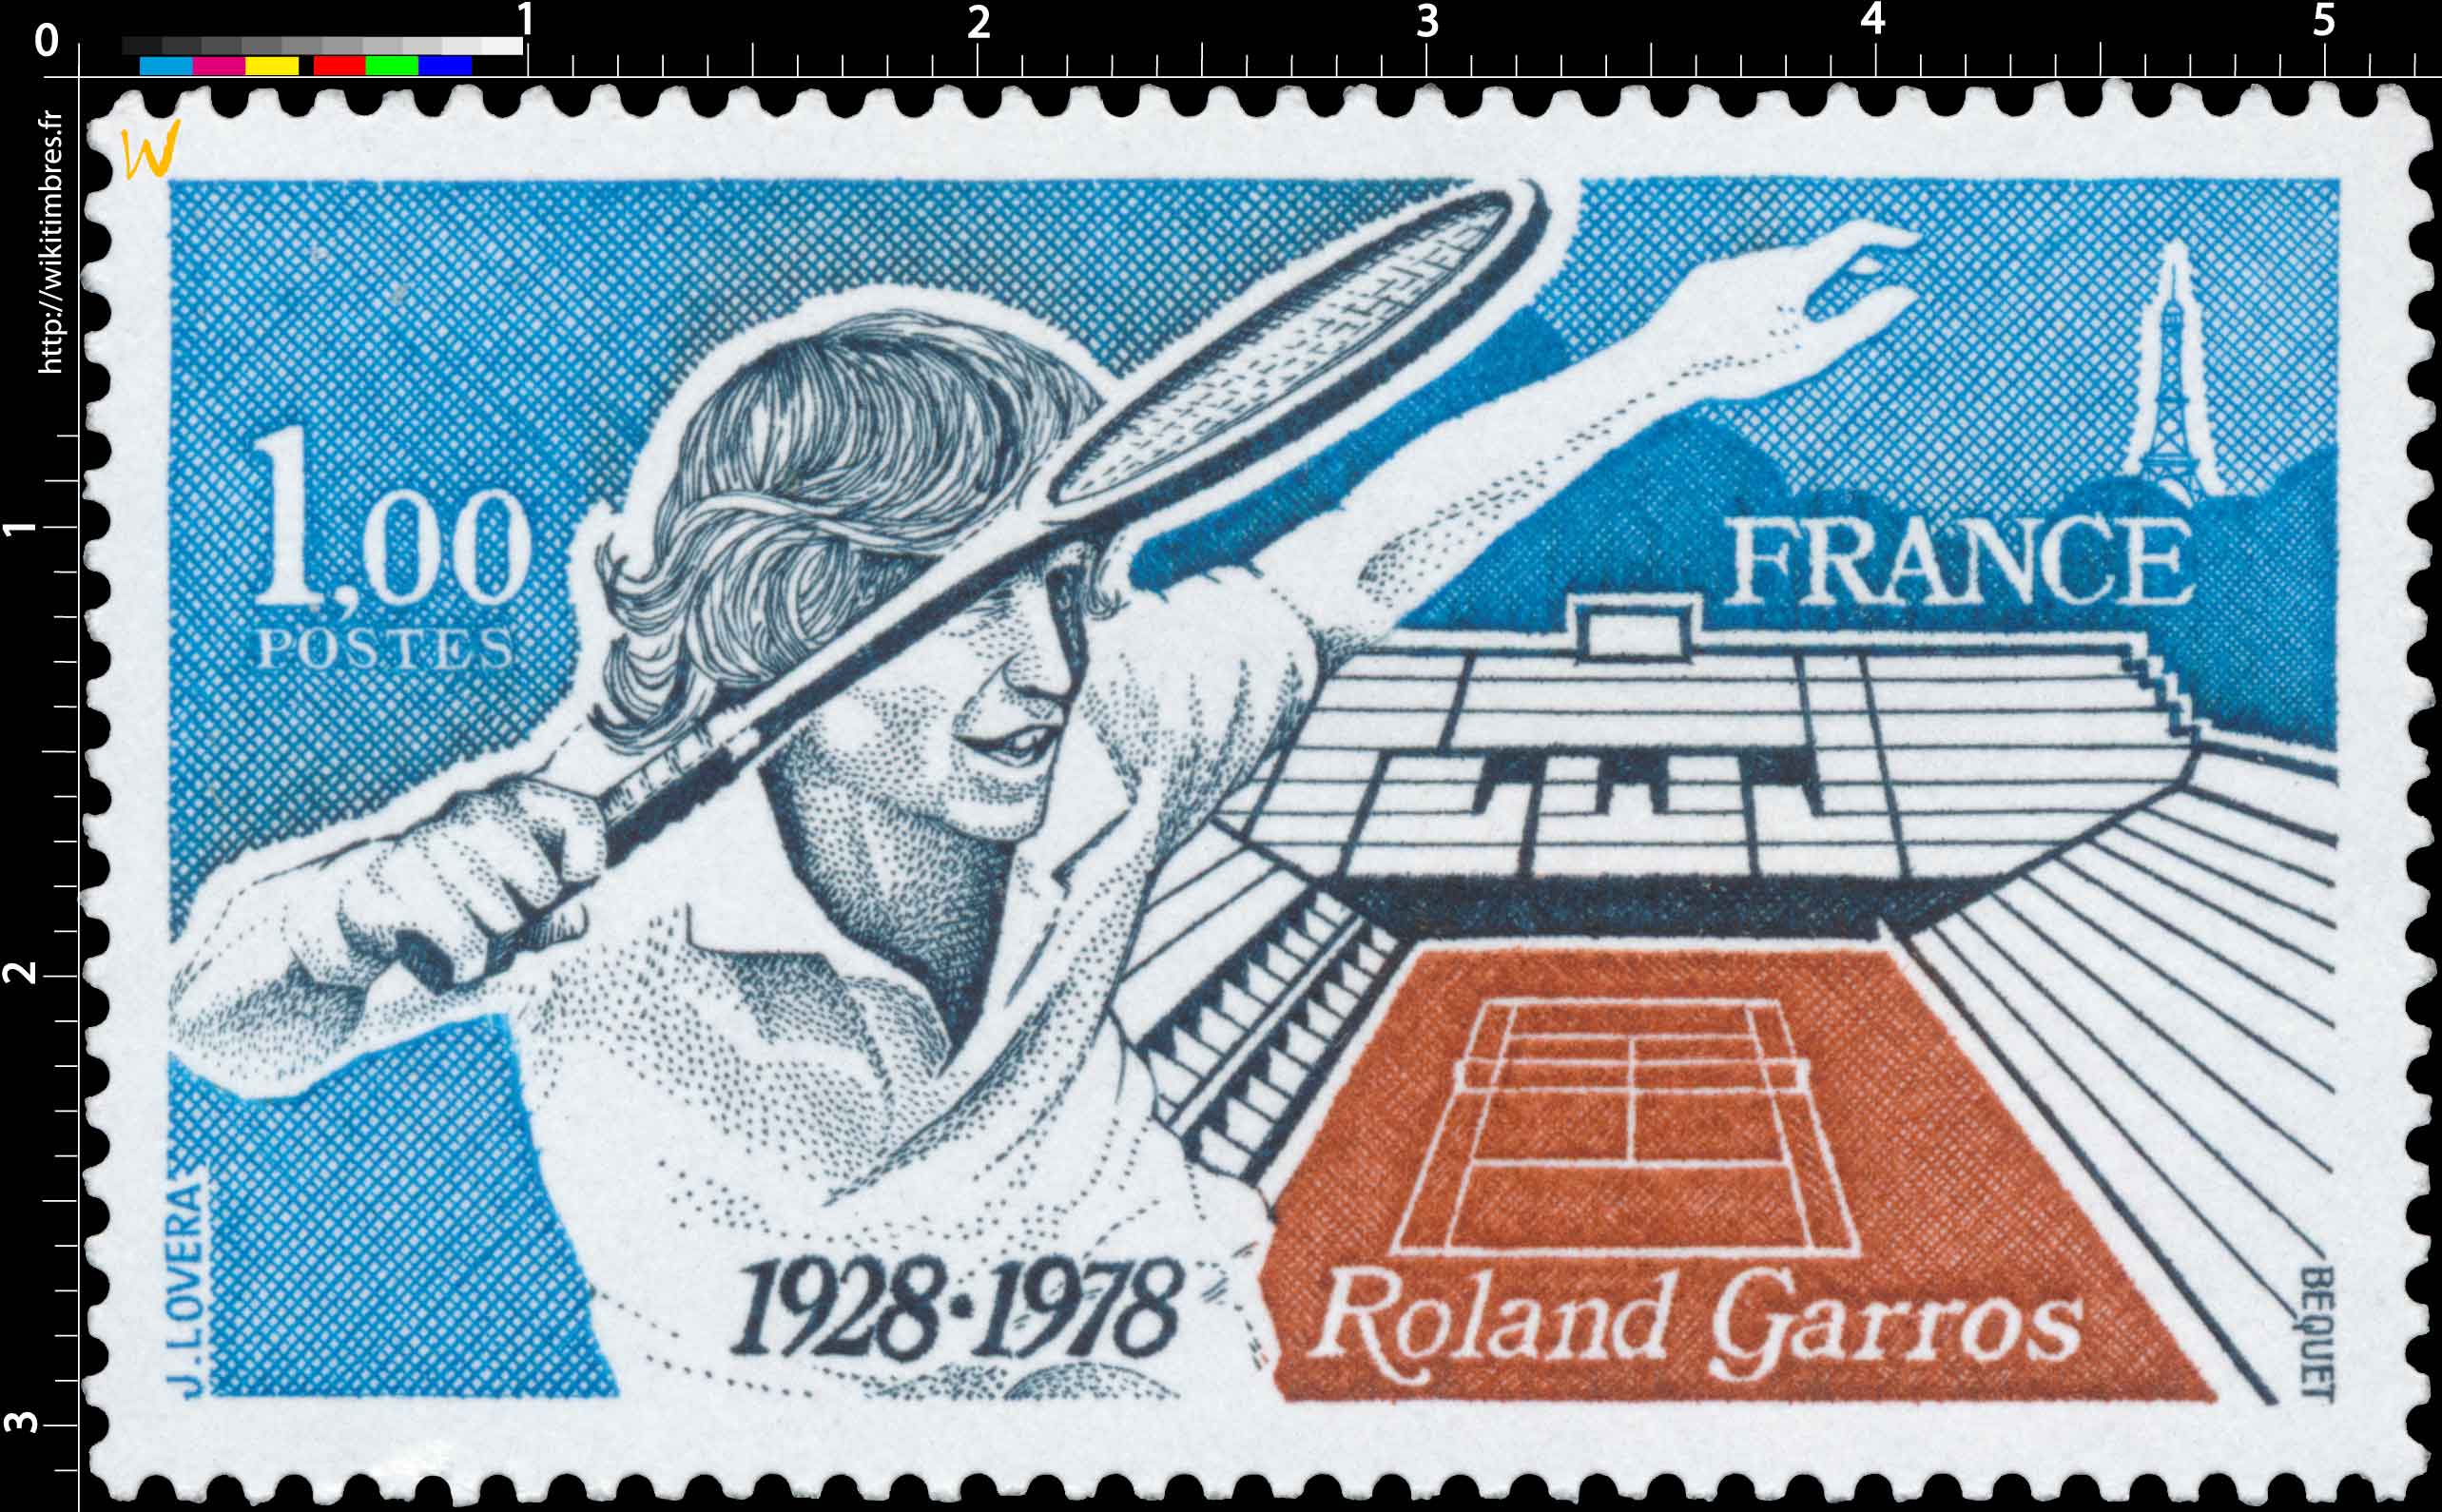 Roland-Garros 1928-1978